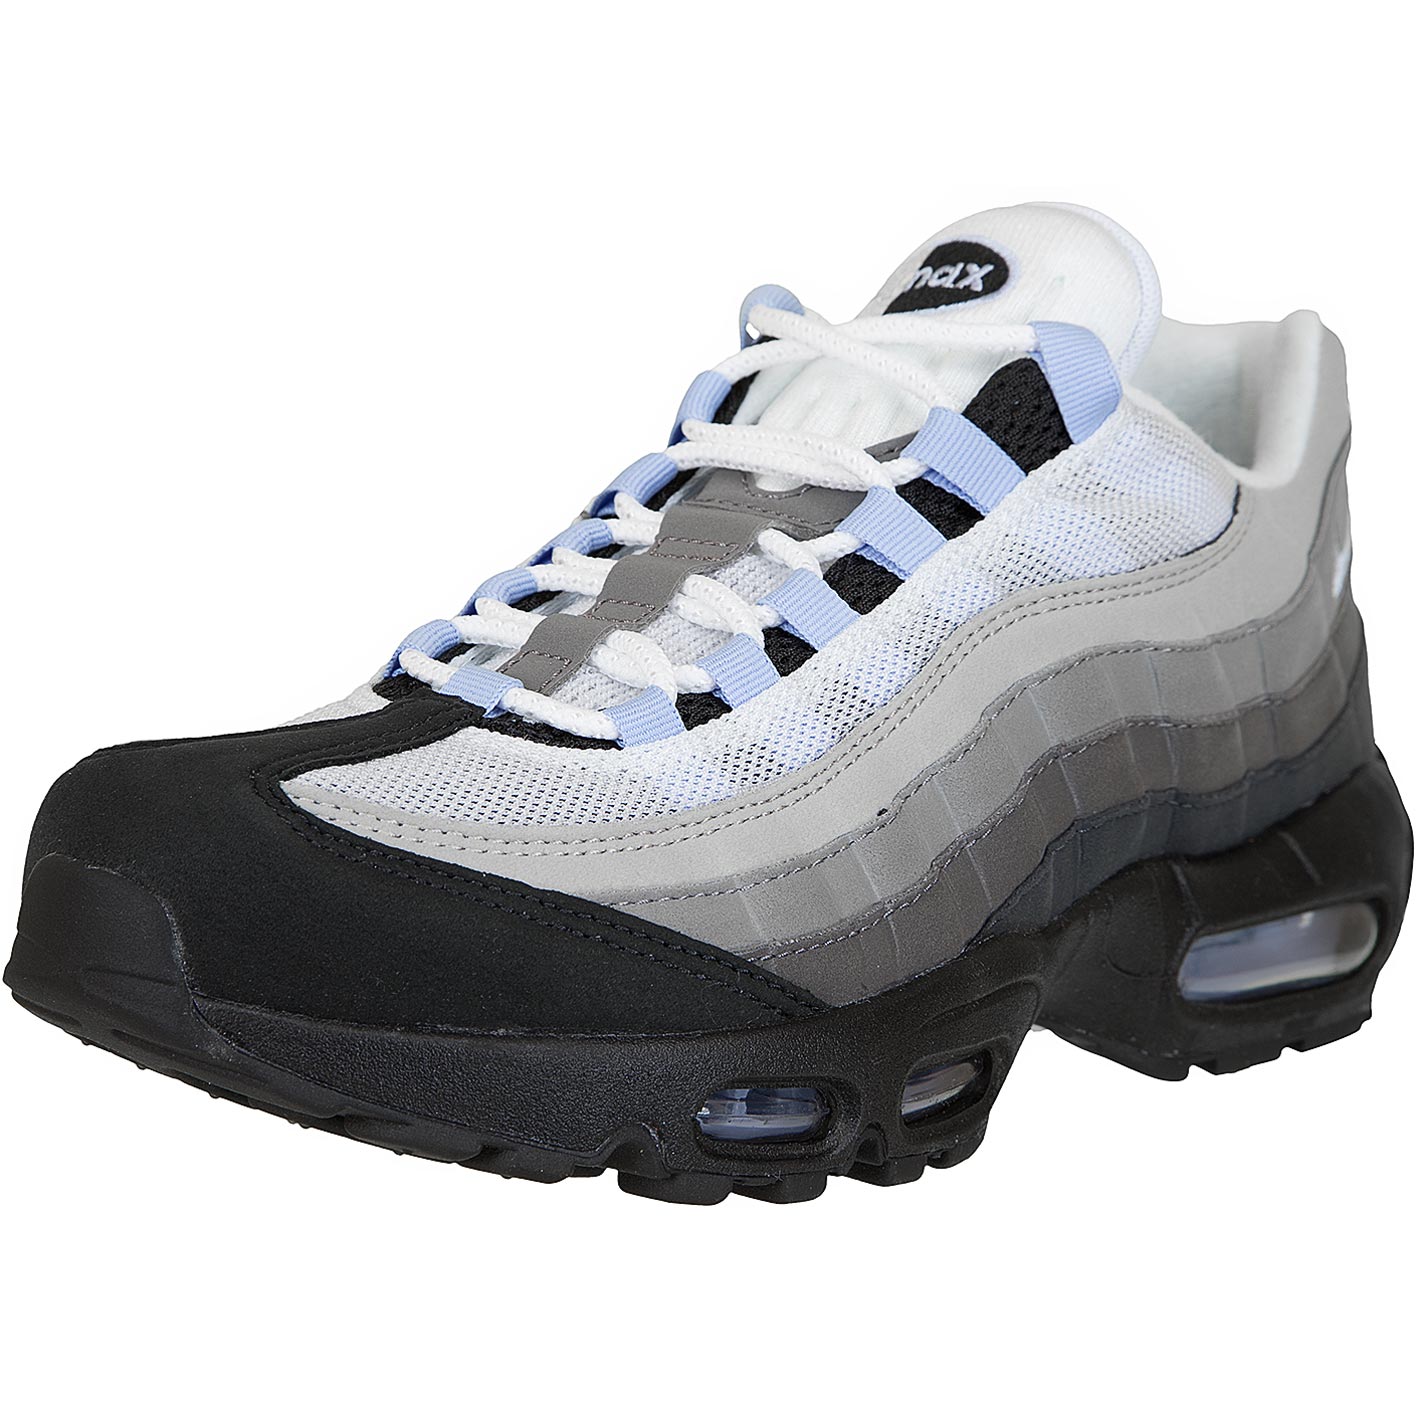 ☆ Nike Sneaker Air Max 95 schwarz/weiß/grau - hier bestellen!